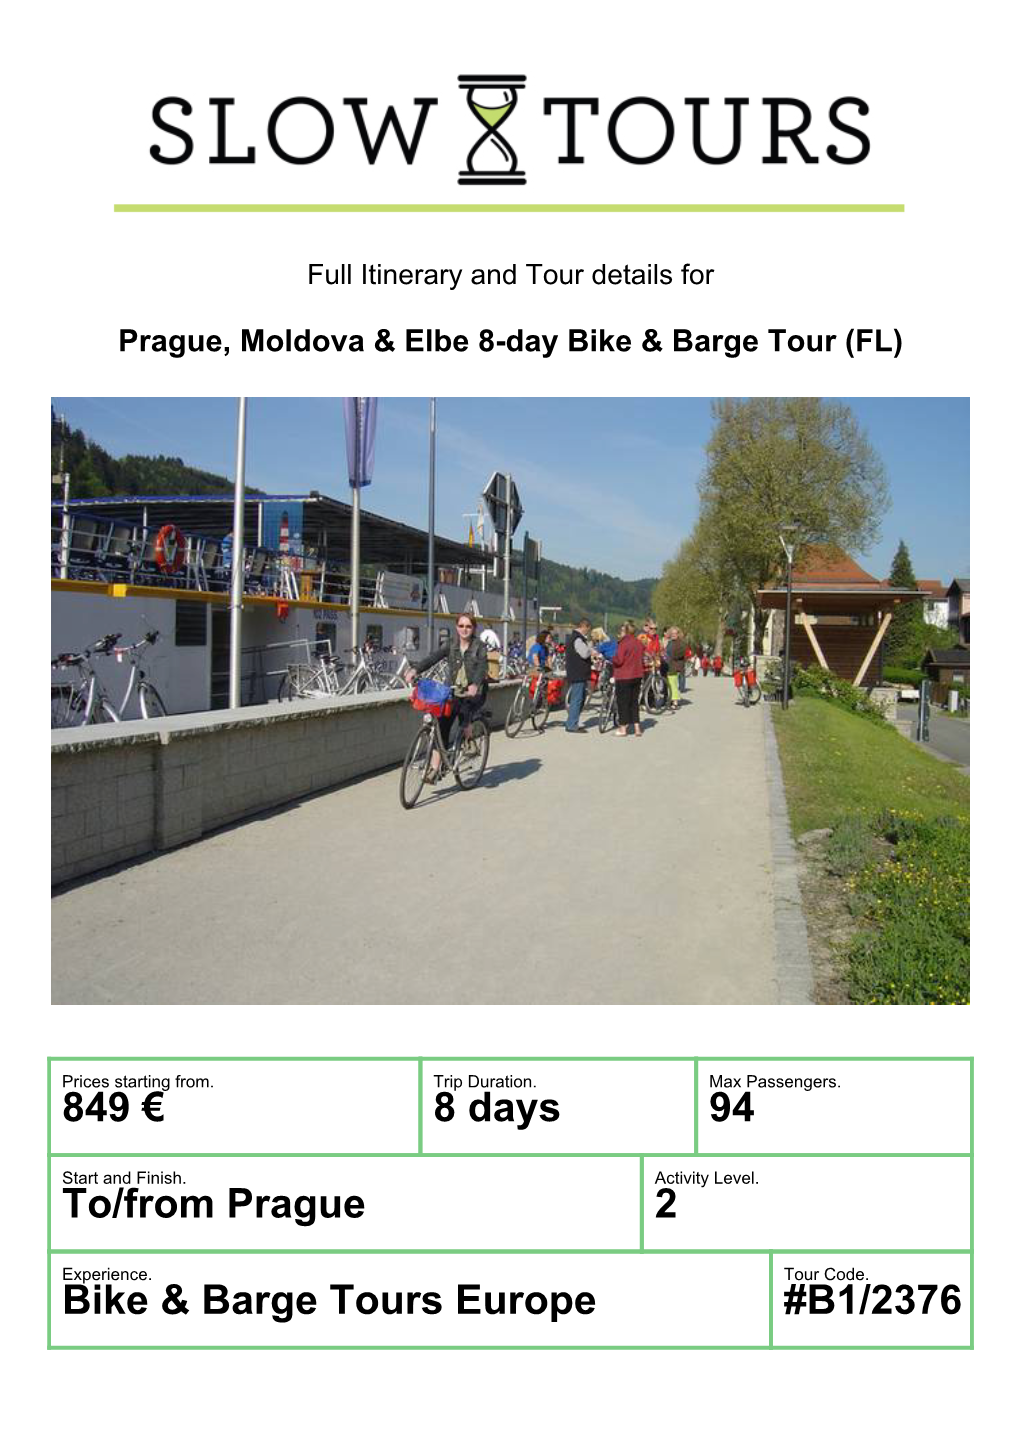 849 € 8 Days 94 To/From Prague 2 Bike & Barge Tours Europe #B1/2376